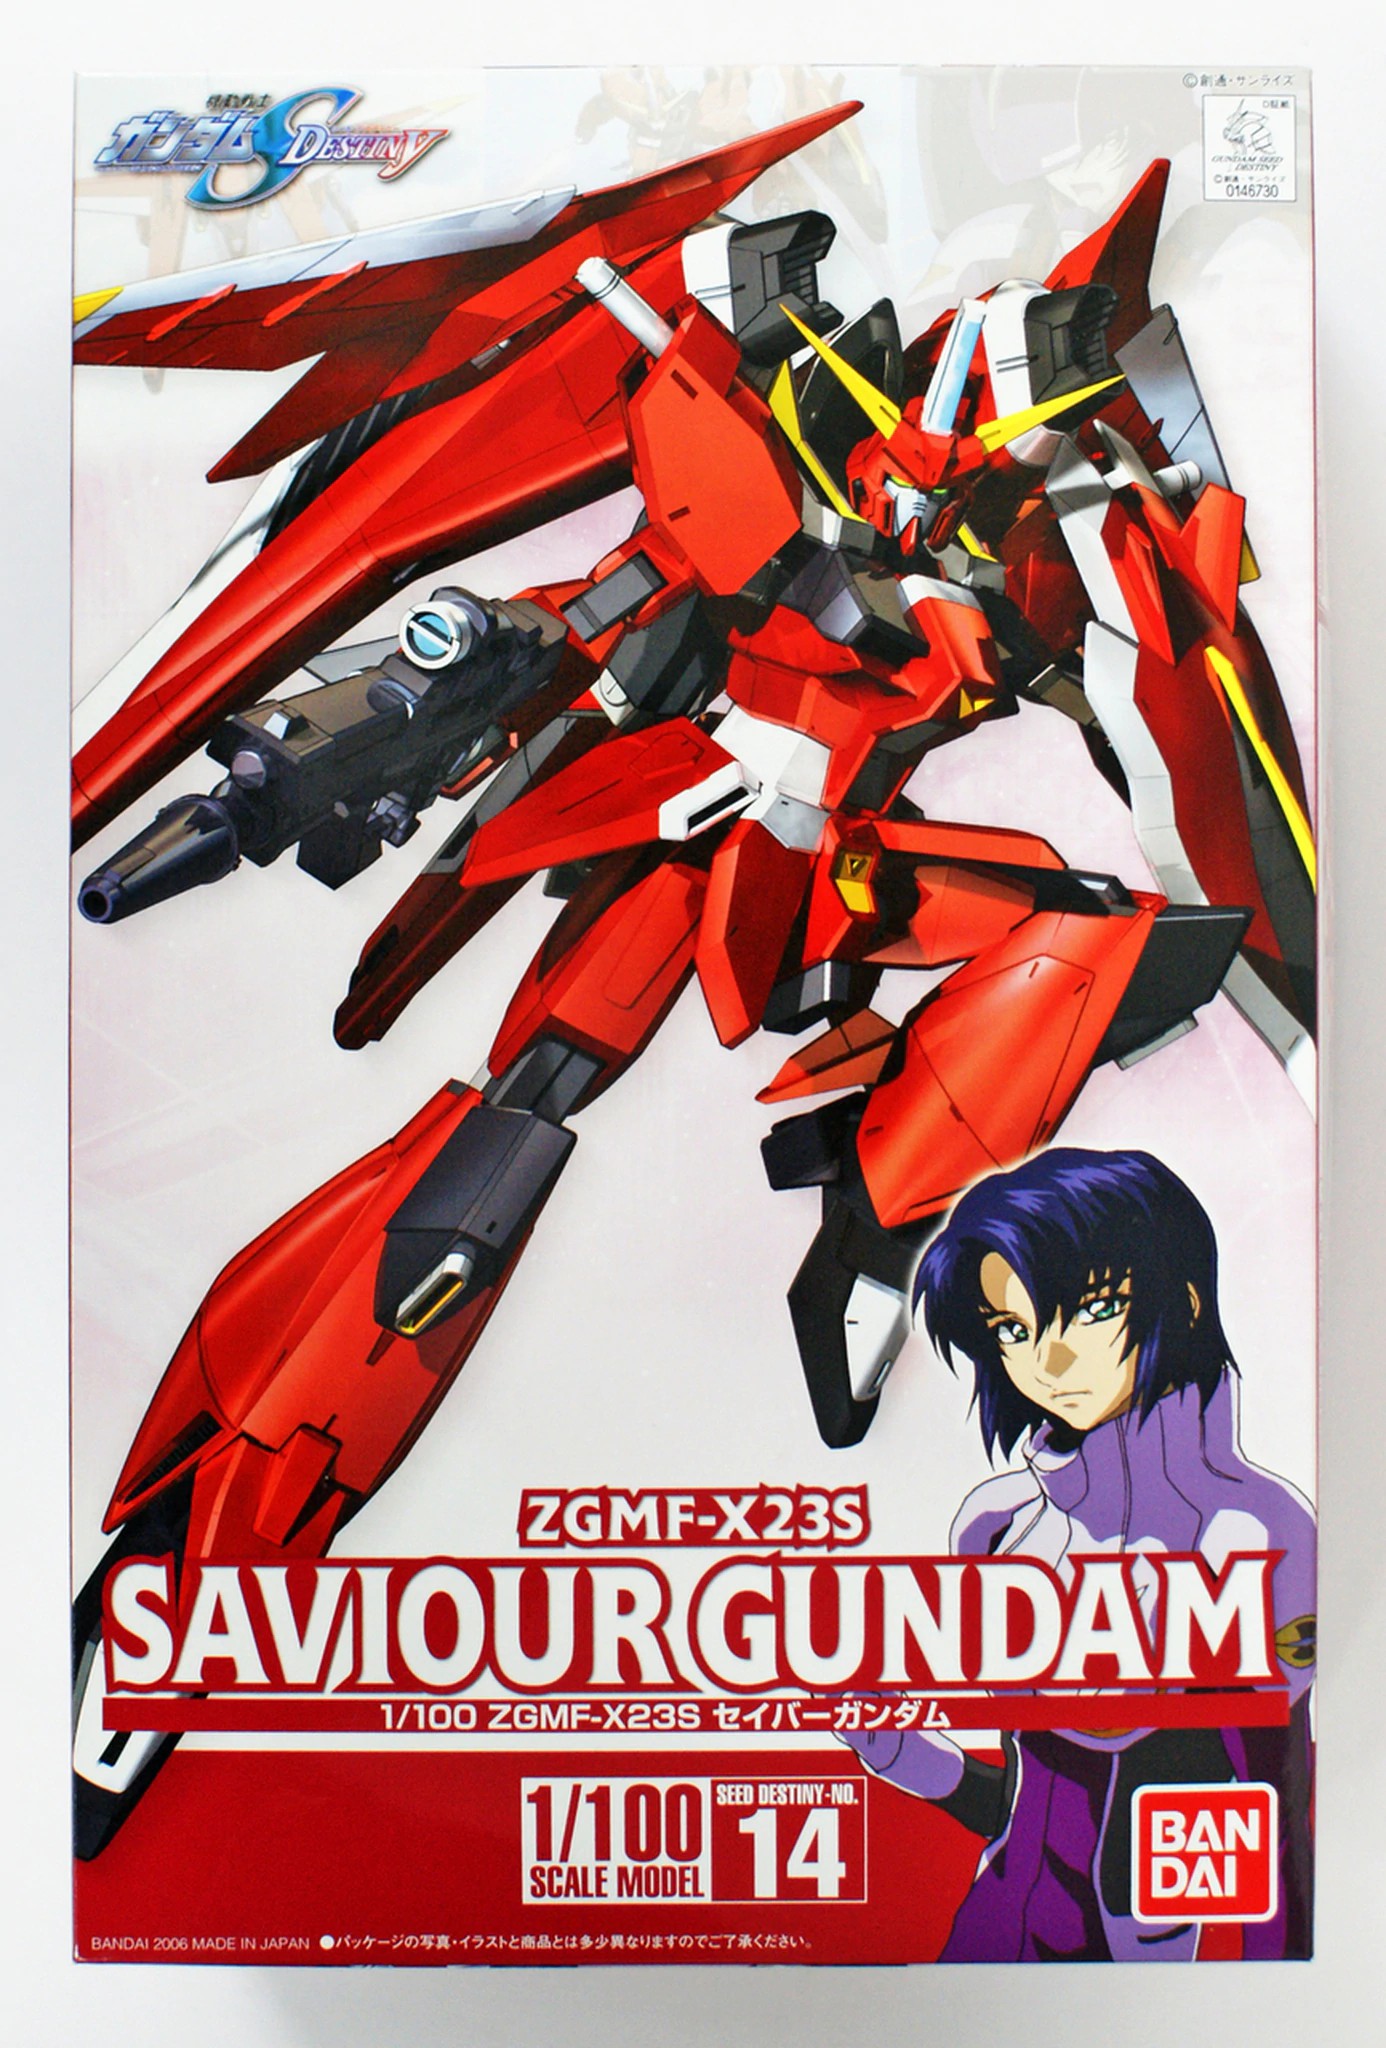 NG 1/100 ZGMF-X23S Saviour Gundam #14